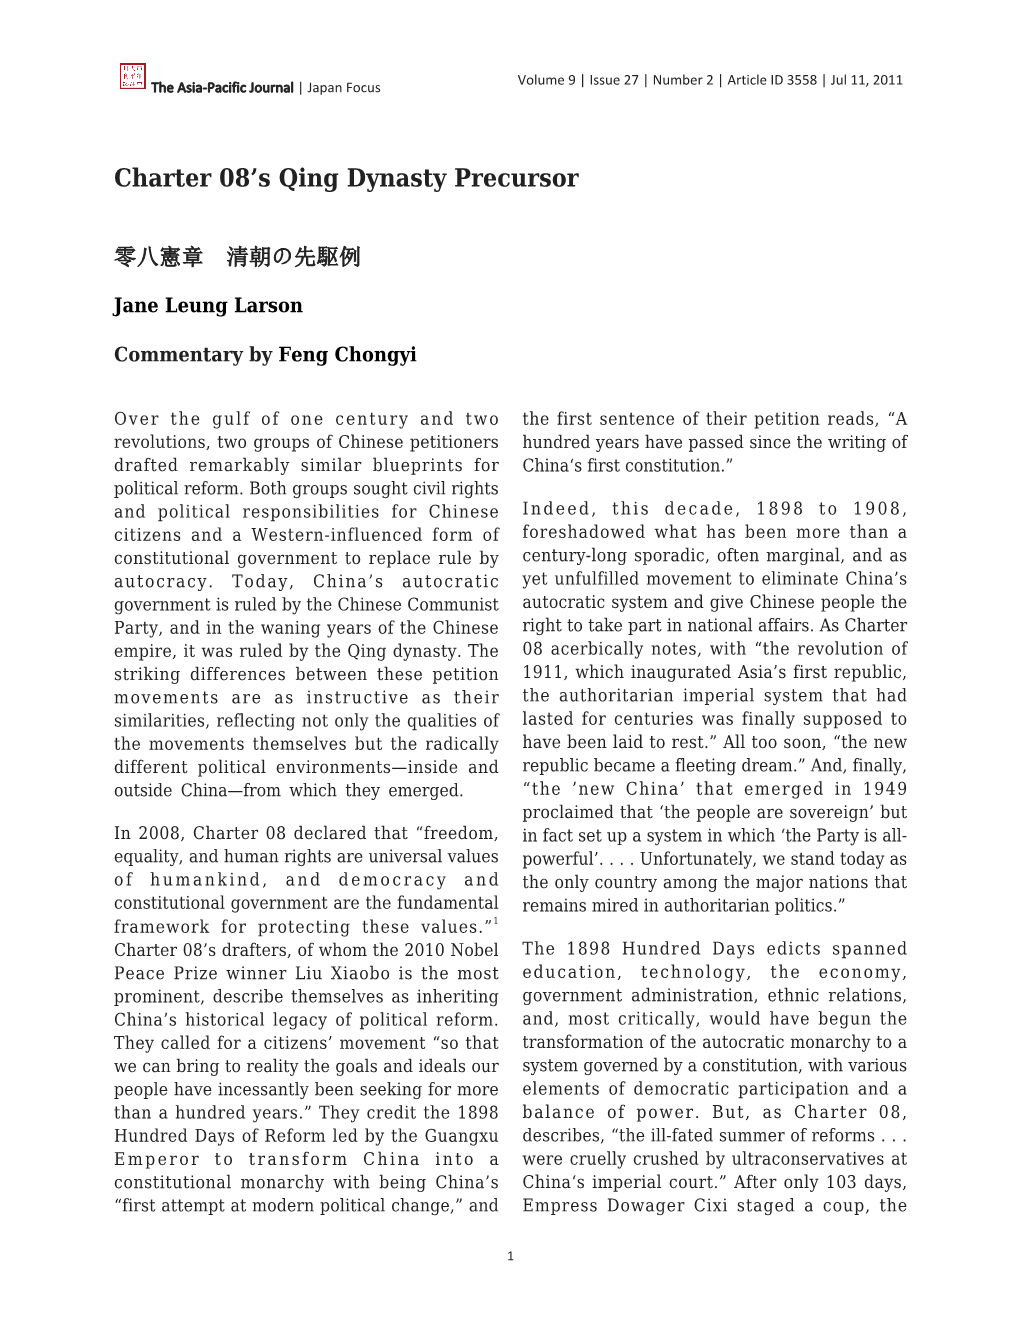 Charter 08'S Qing Dynasty Precursor